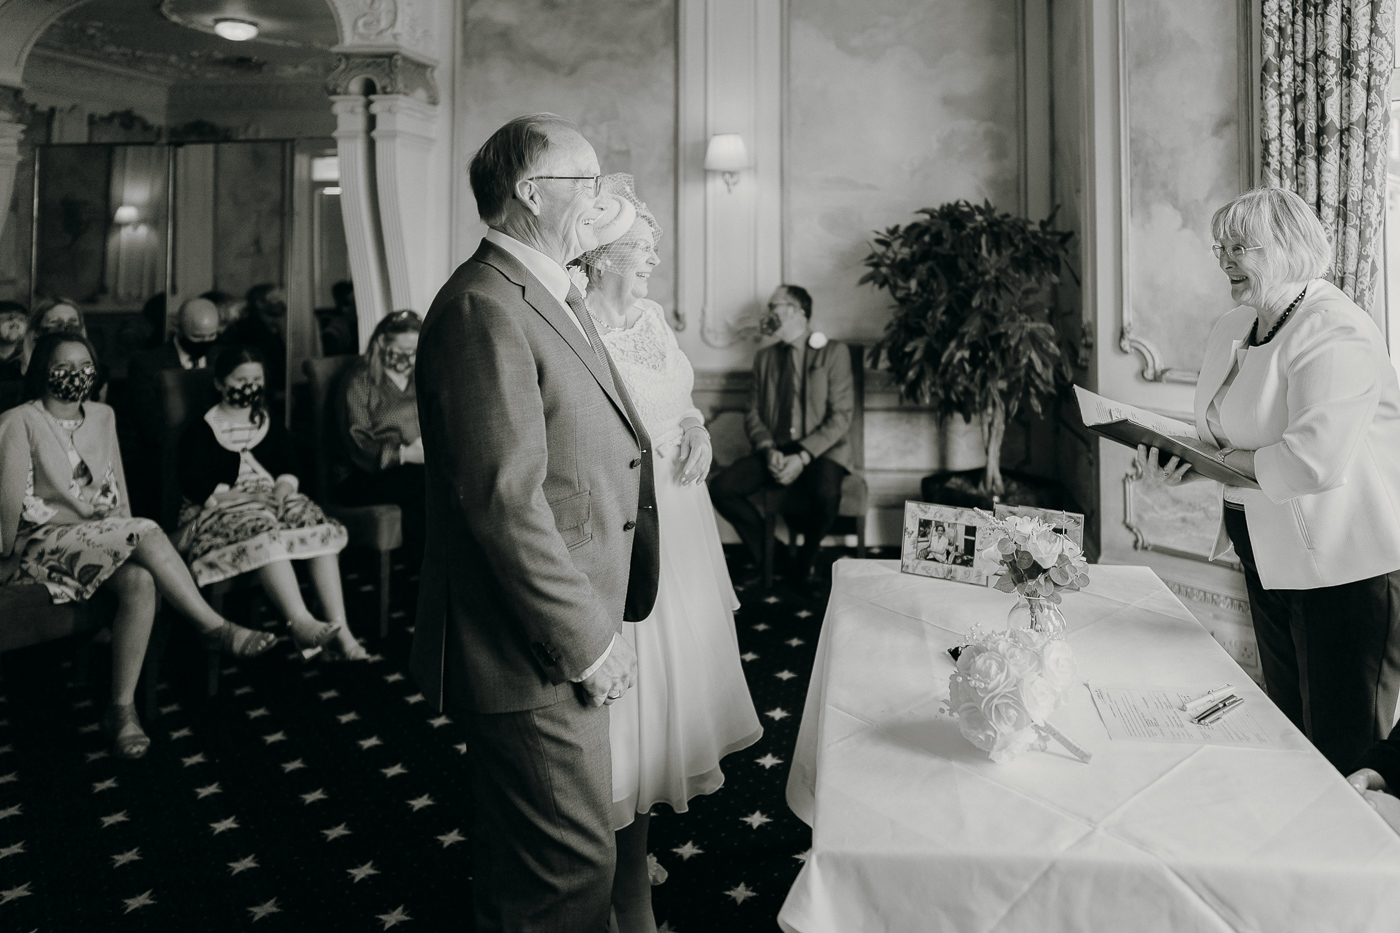 Wedding ceremony inside the Palace Hotel, Paignton.